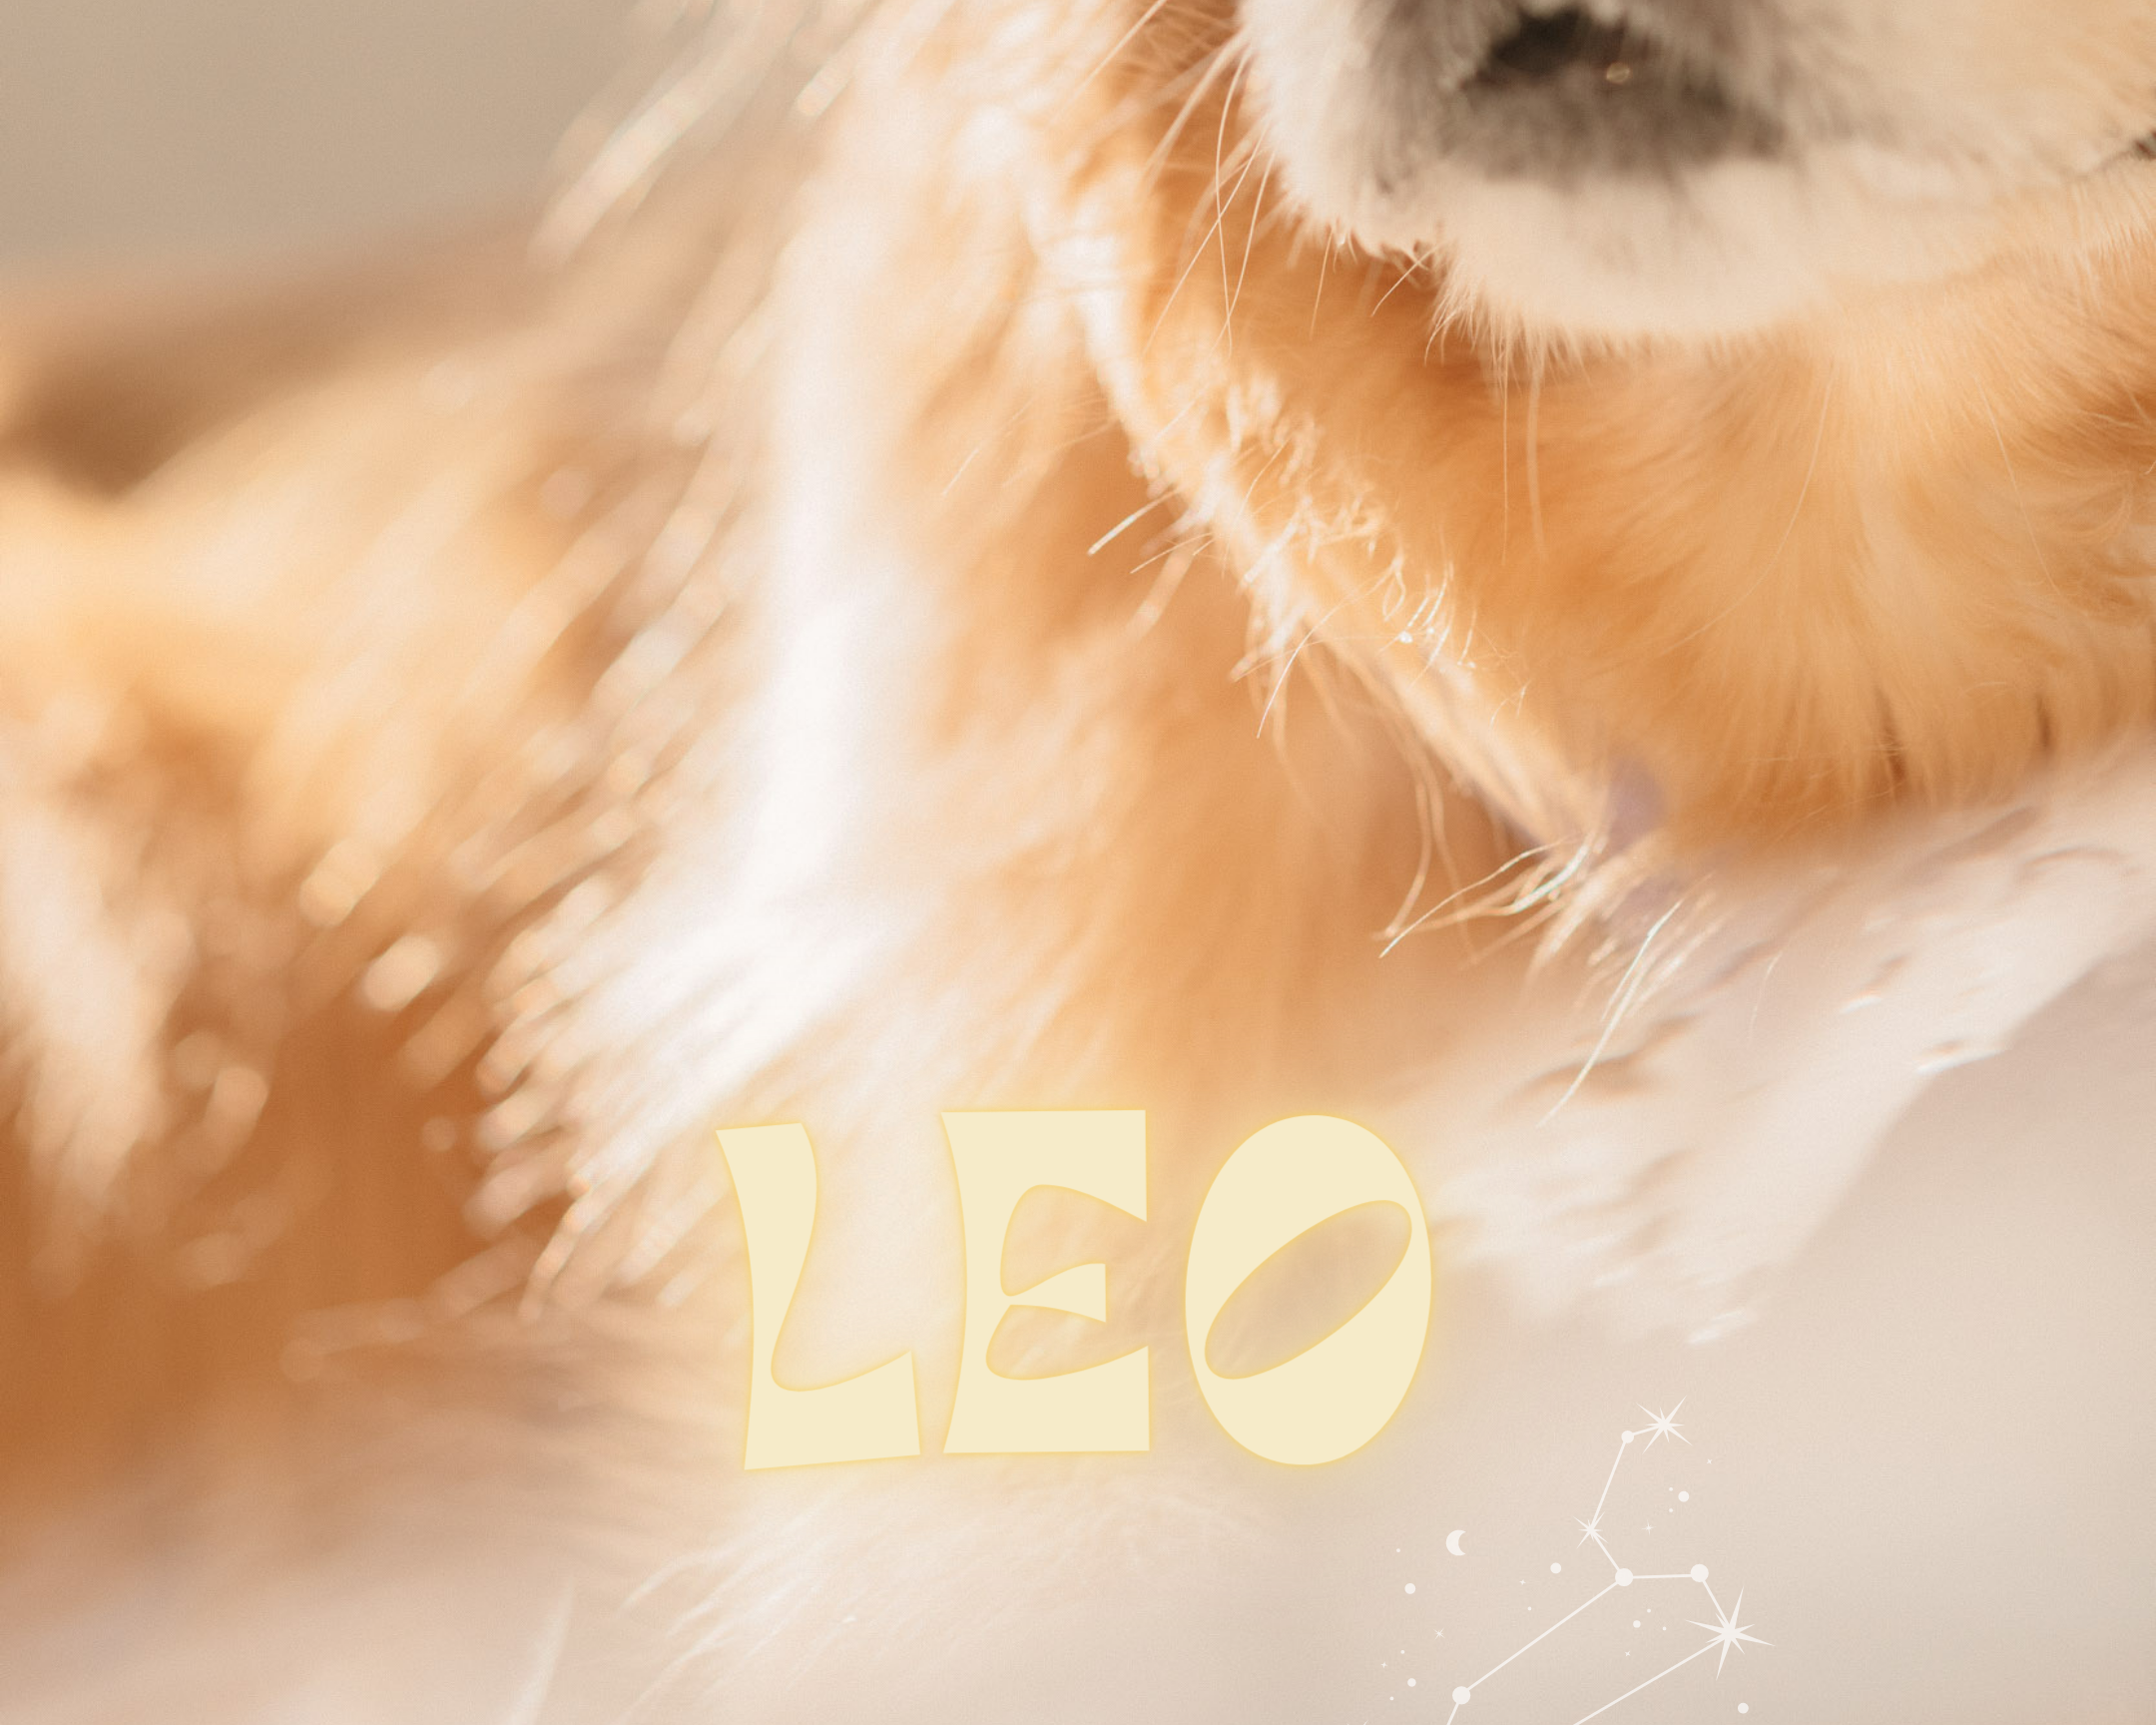 Leos ❋ A captivating blend of charisma & creativity